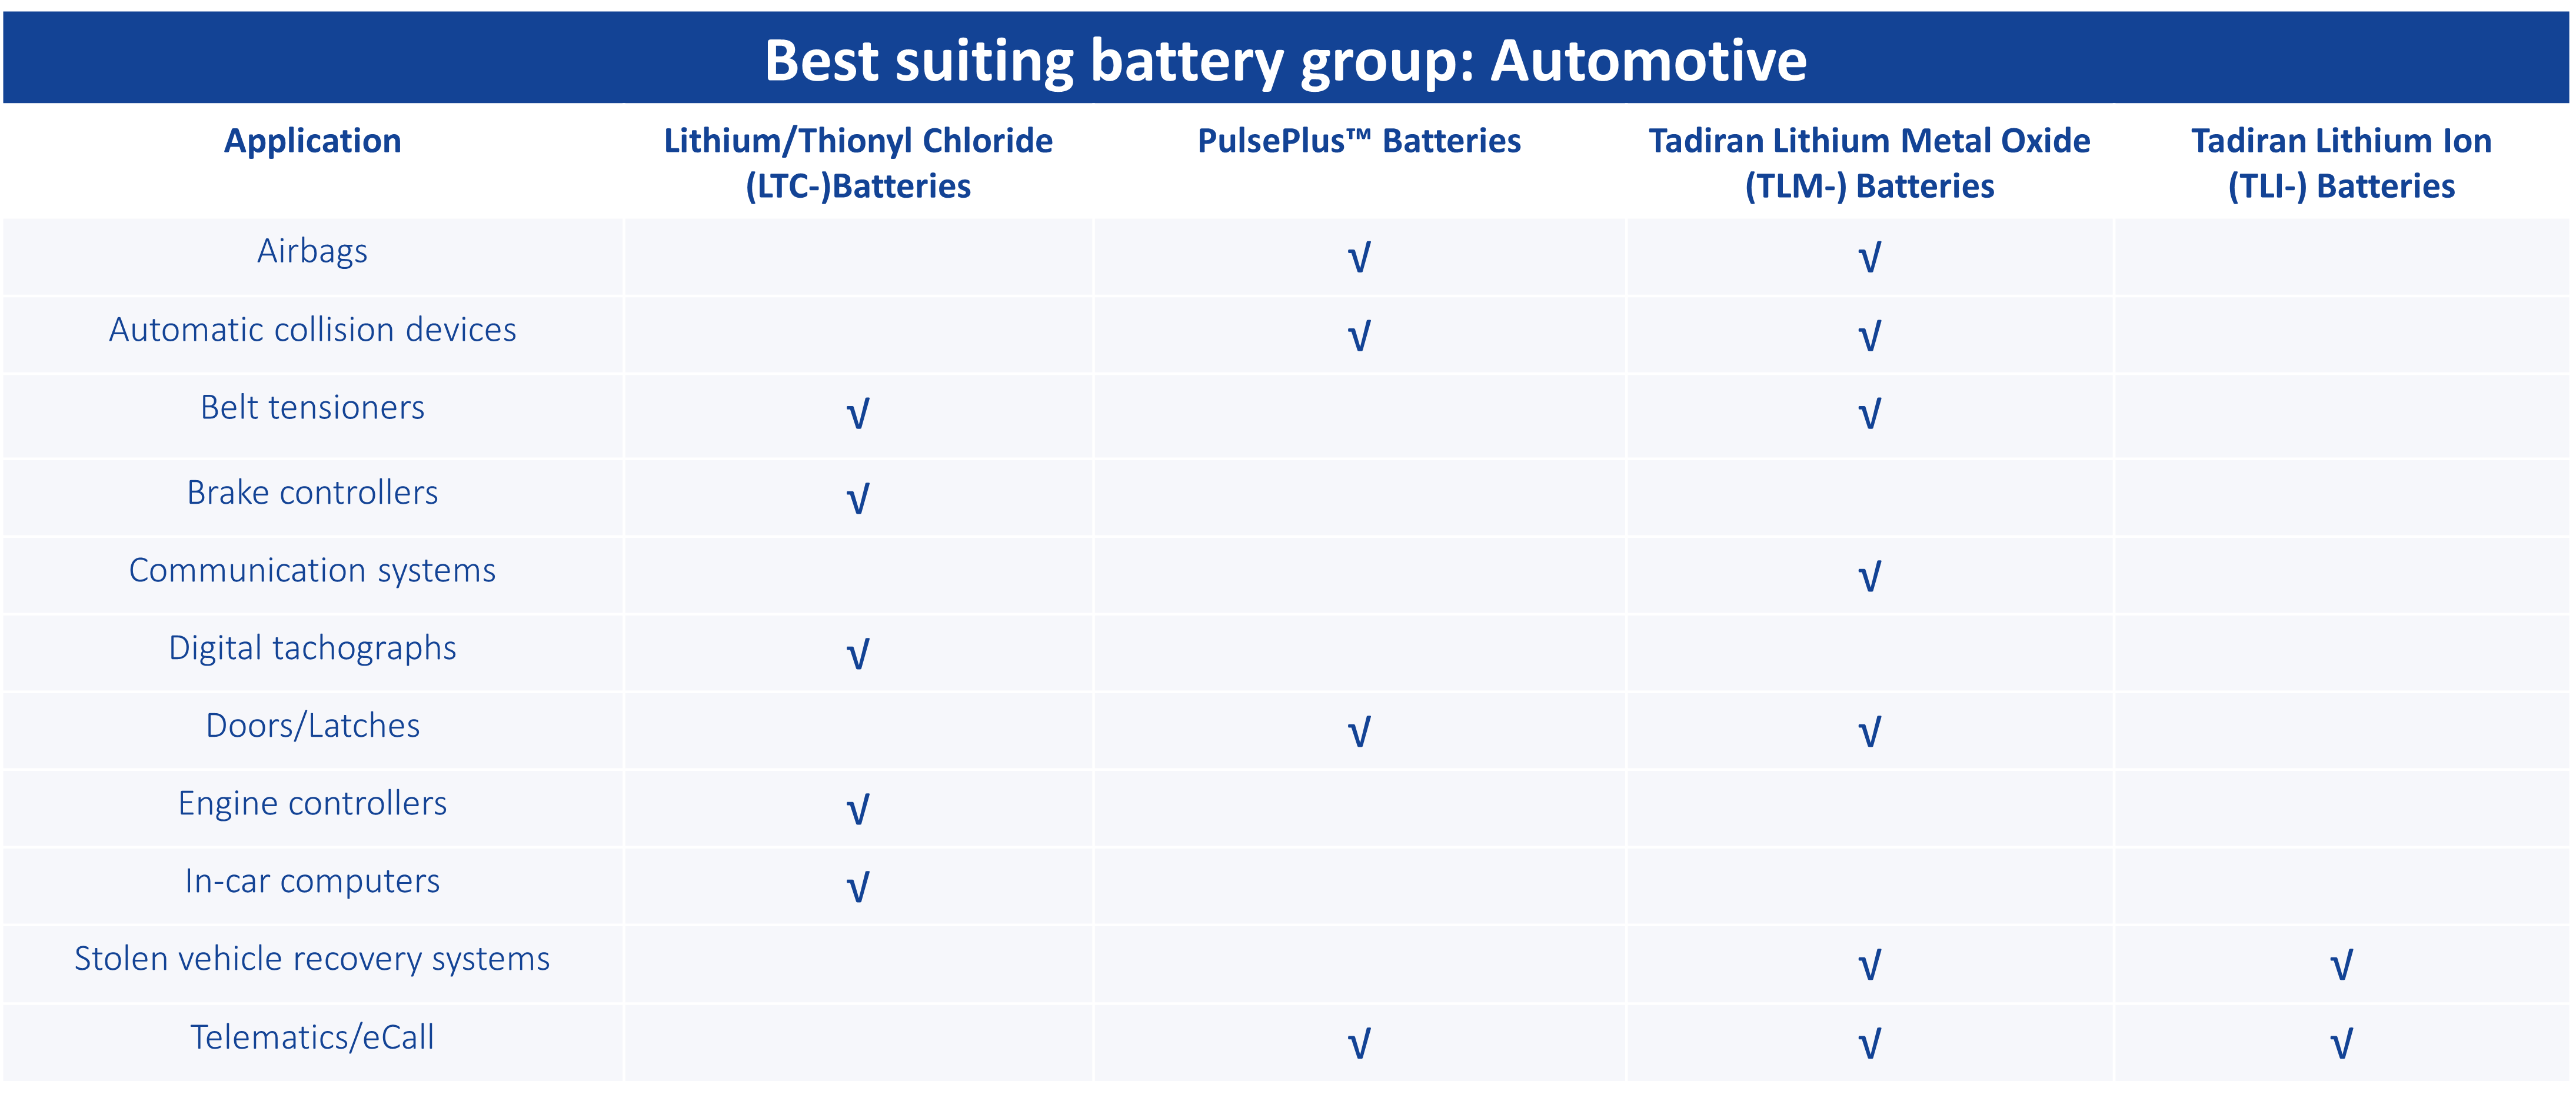 Batteries for Automotive Applications